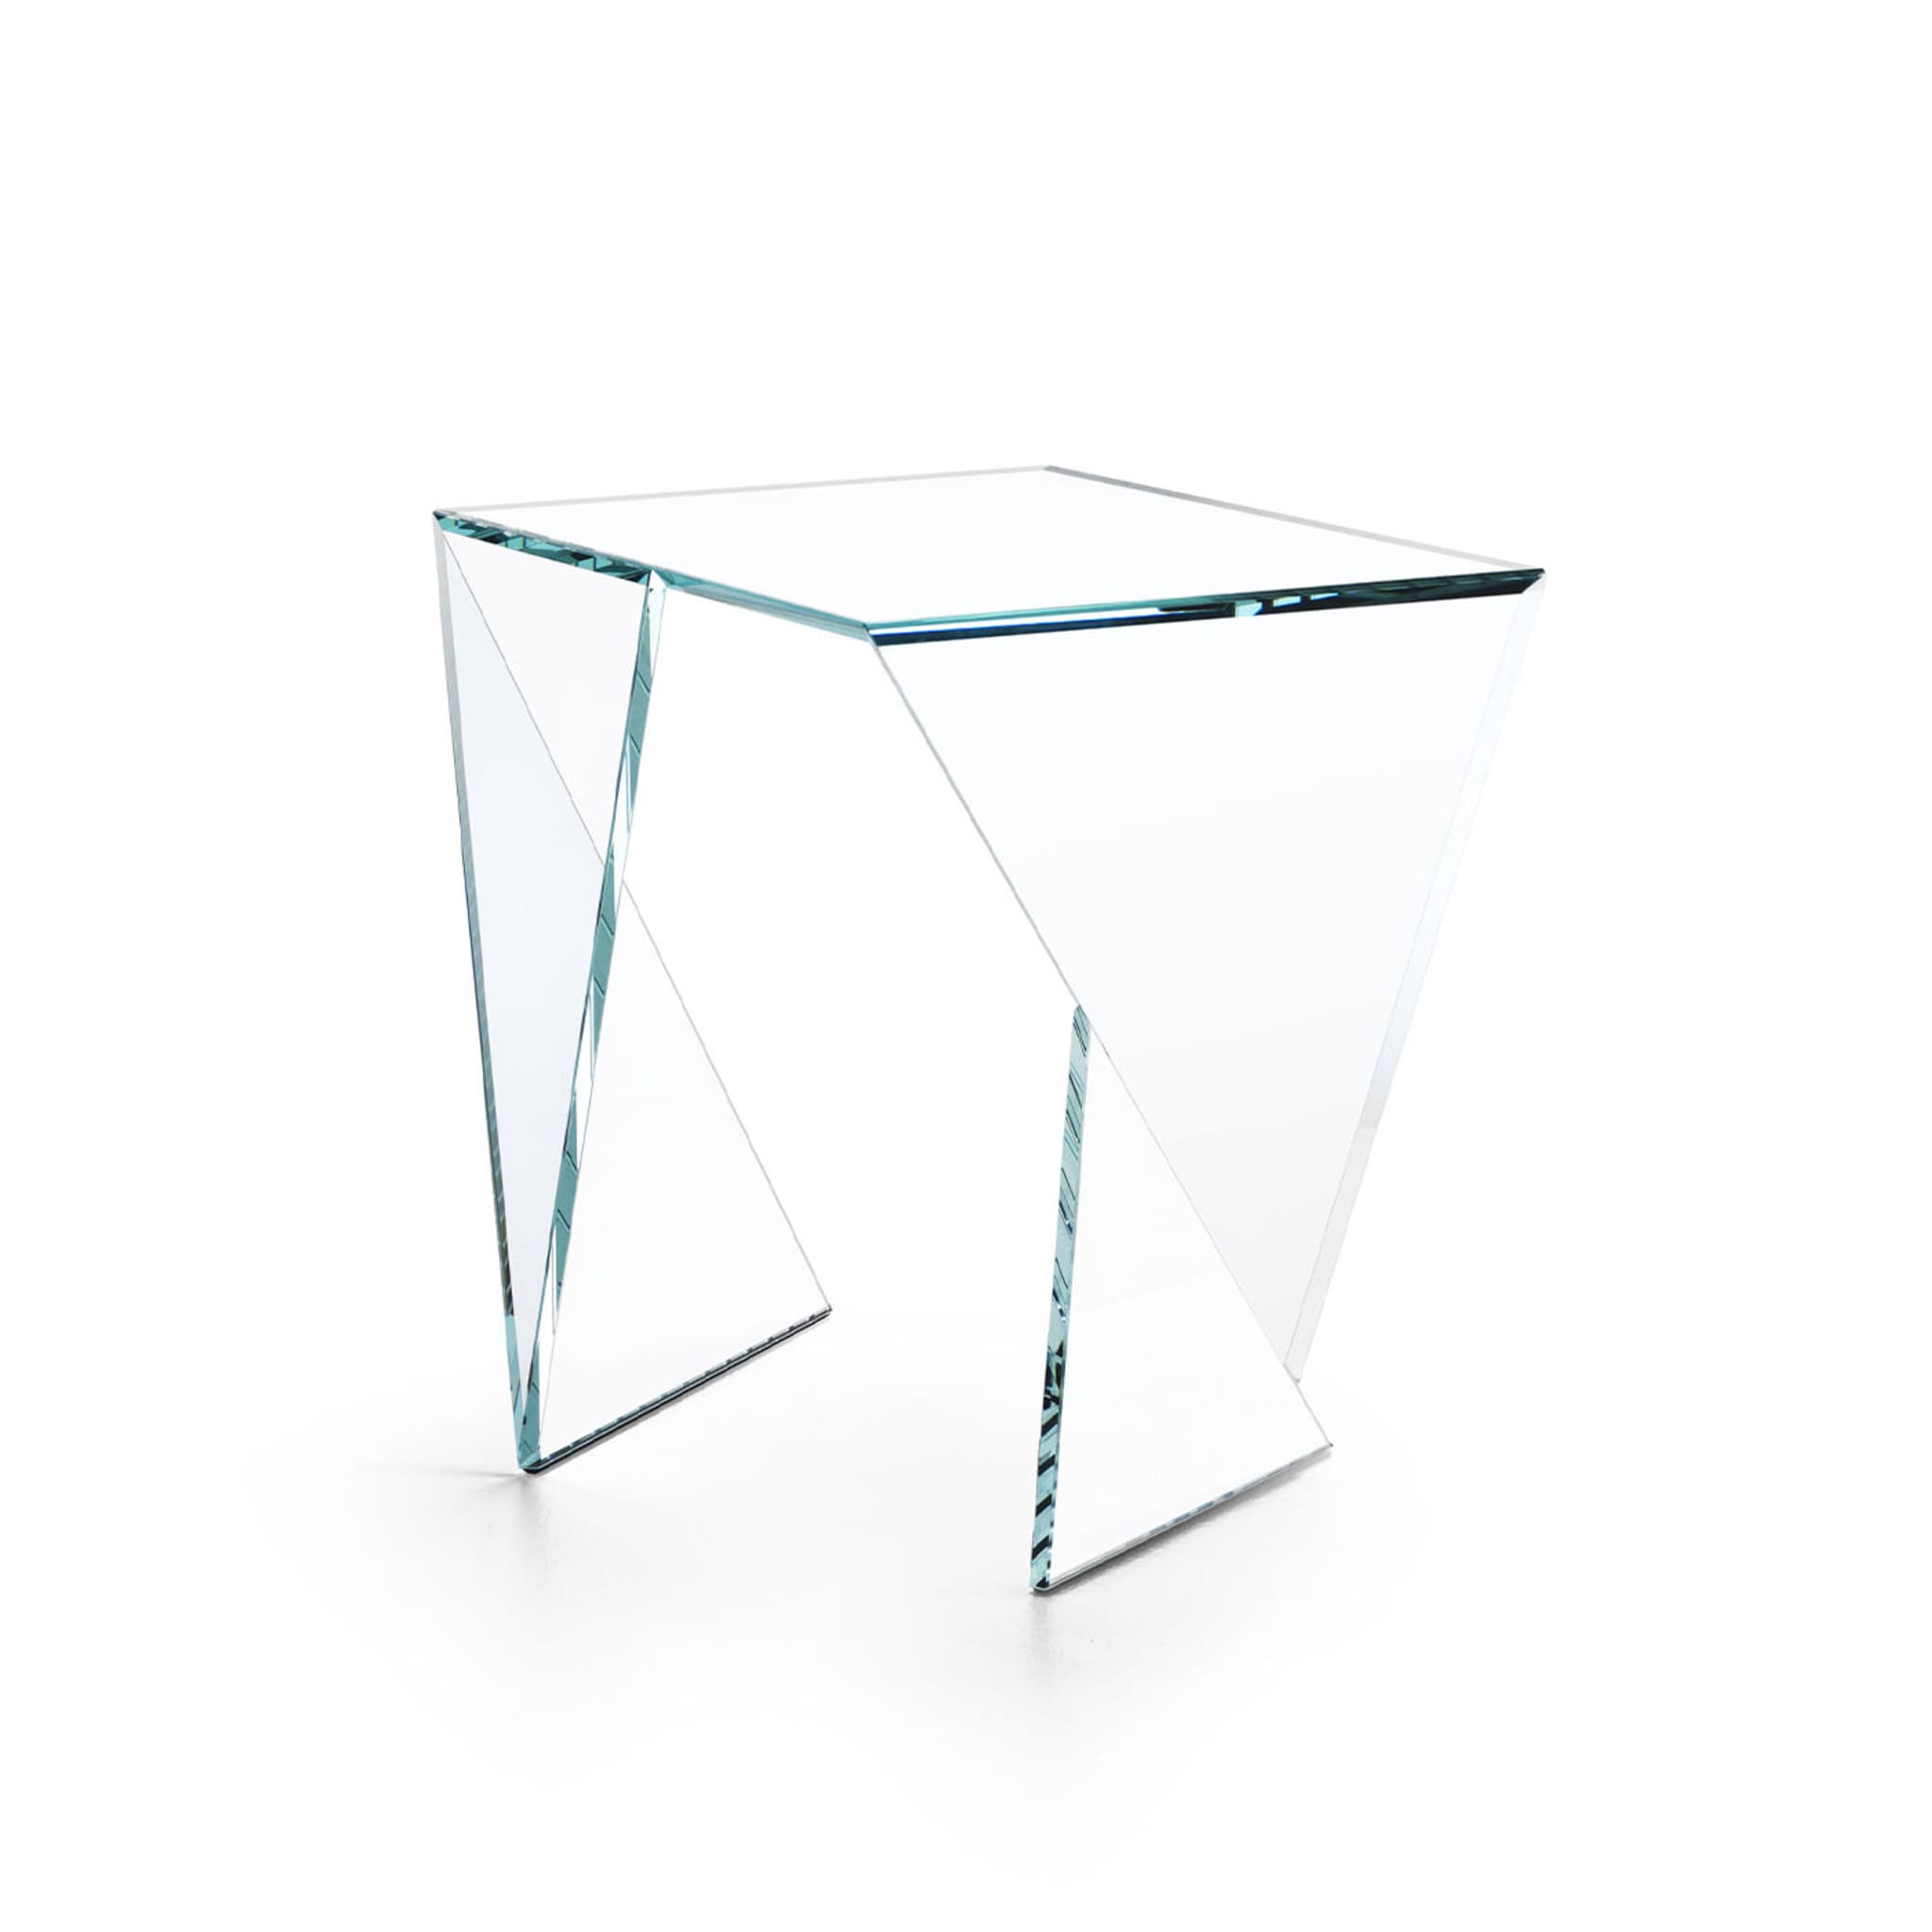 Origami Calcio Side Table - Vue alternative 1